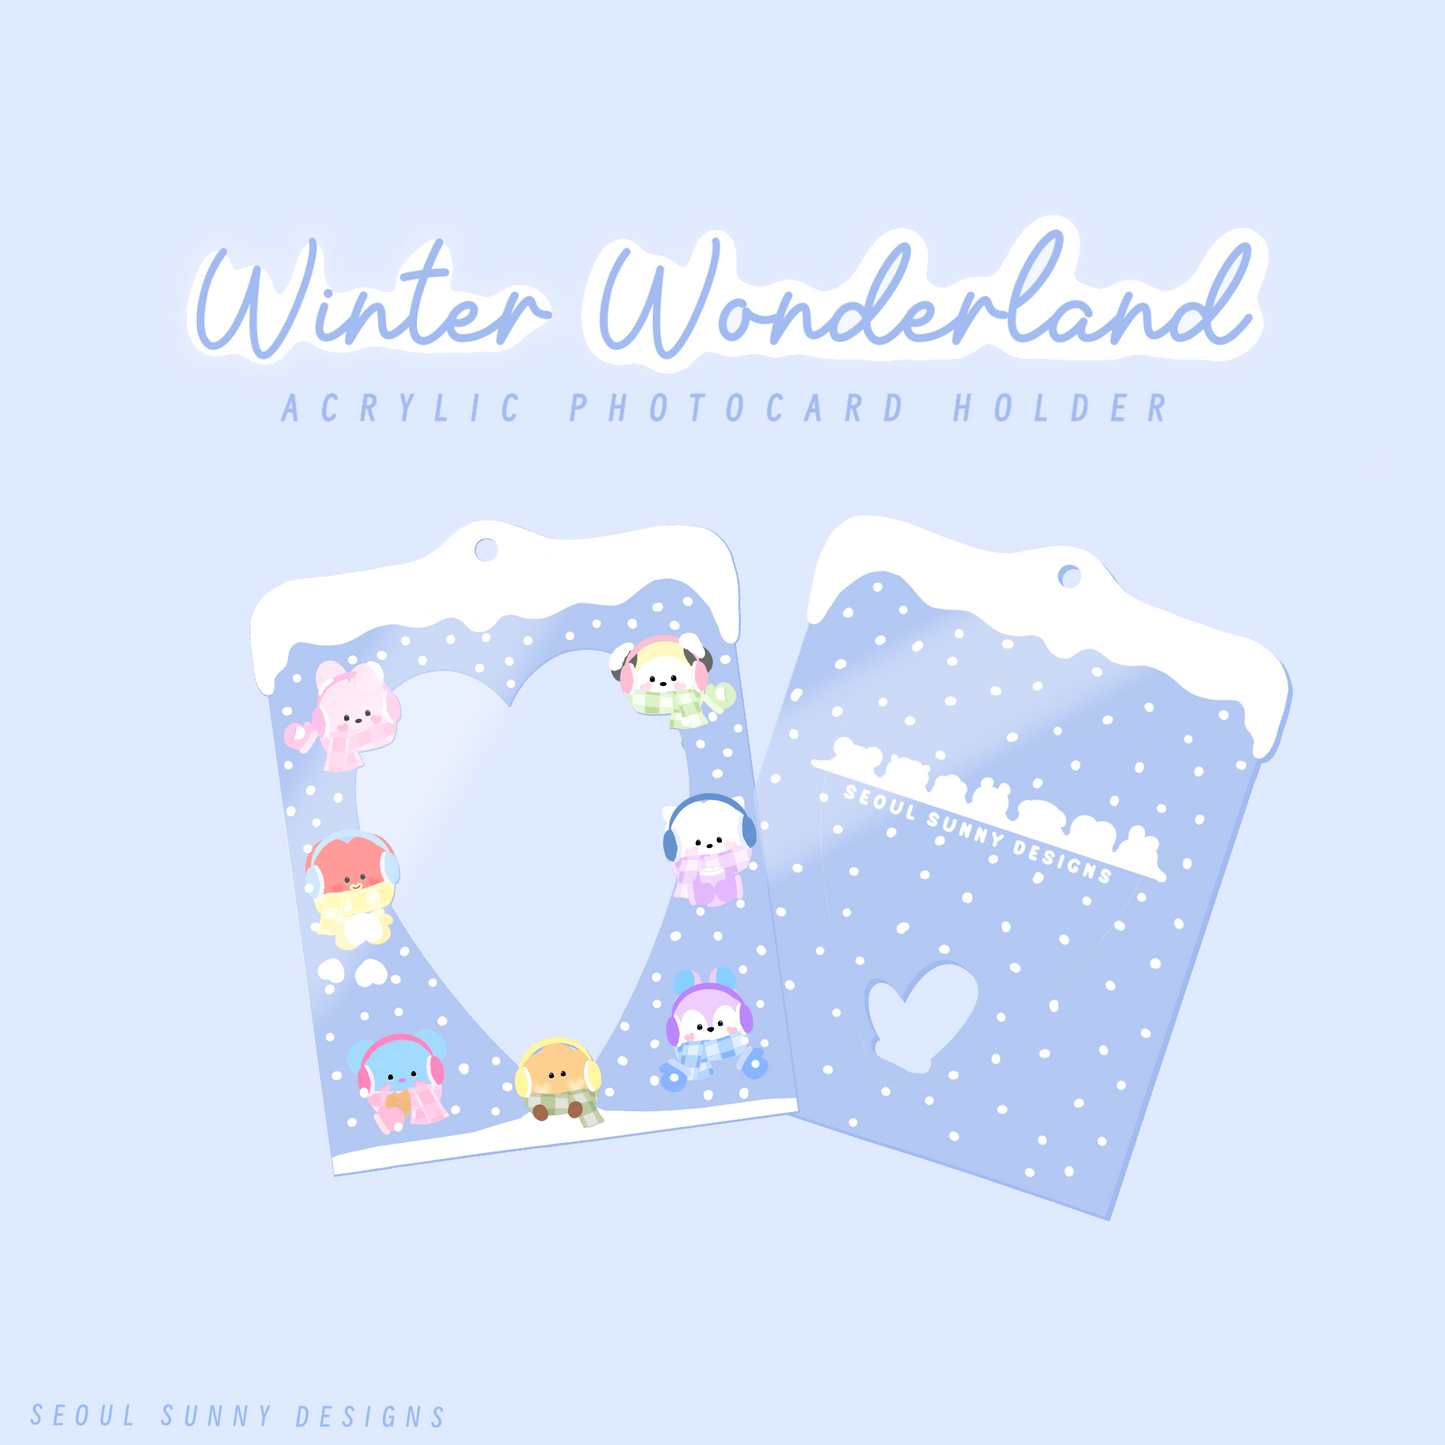 Seoul Sunny Designs BT21 Winter Wonderland Acrylic Photocard Holder